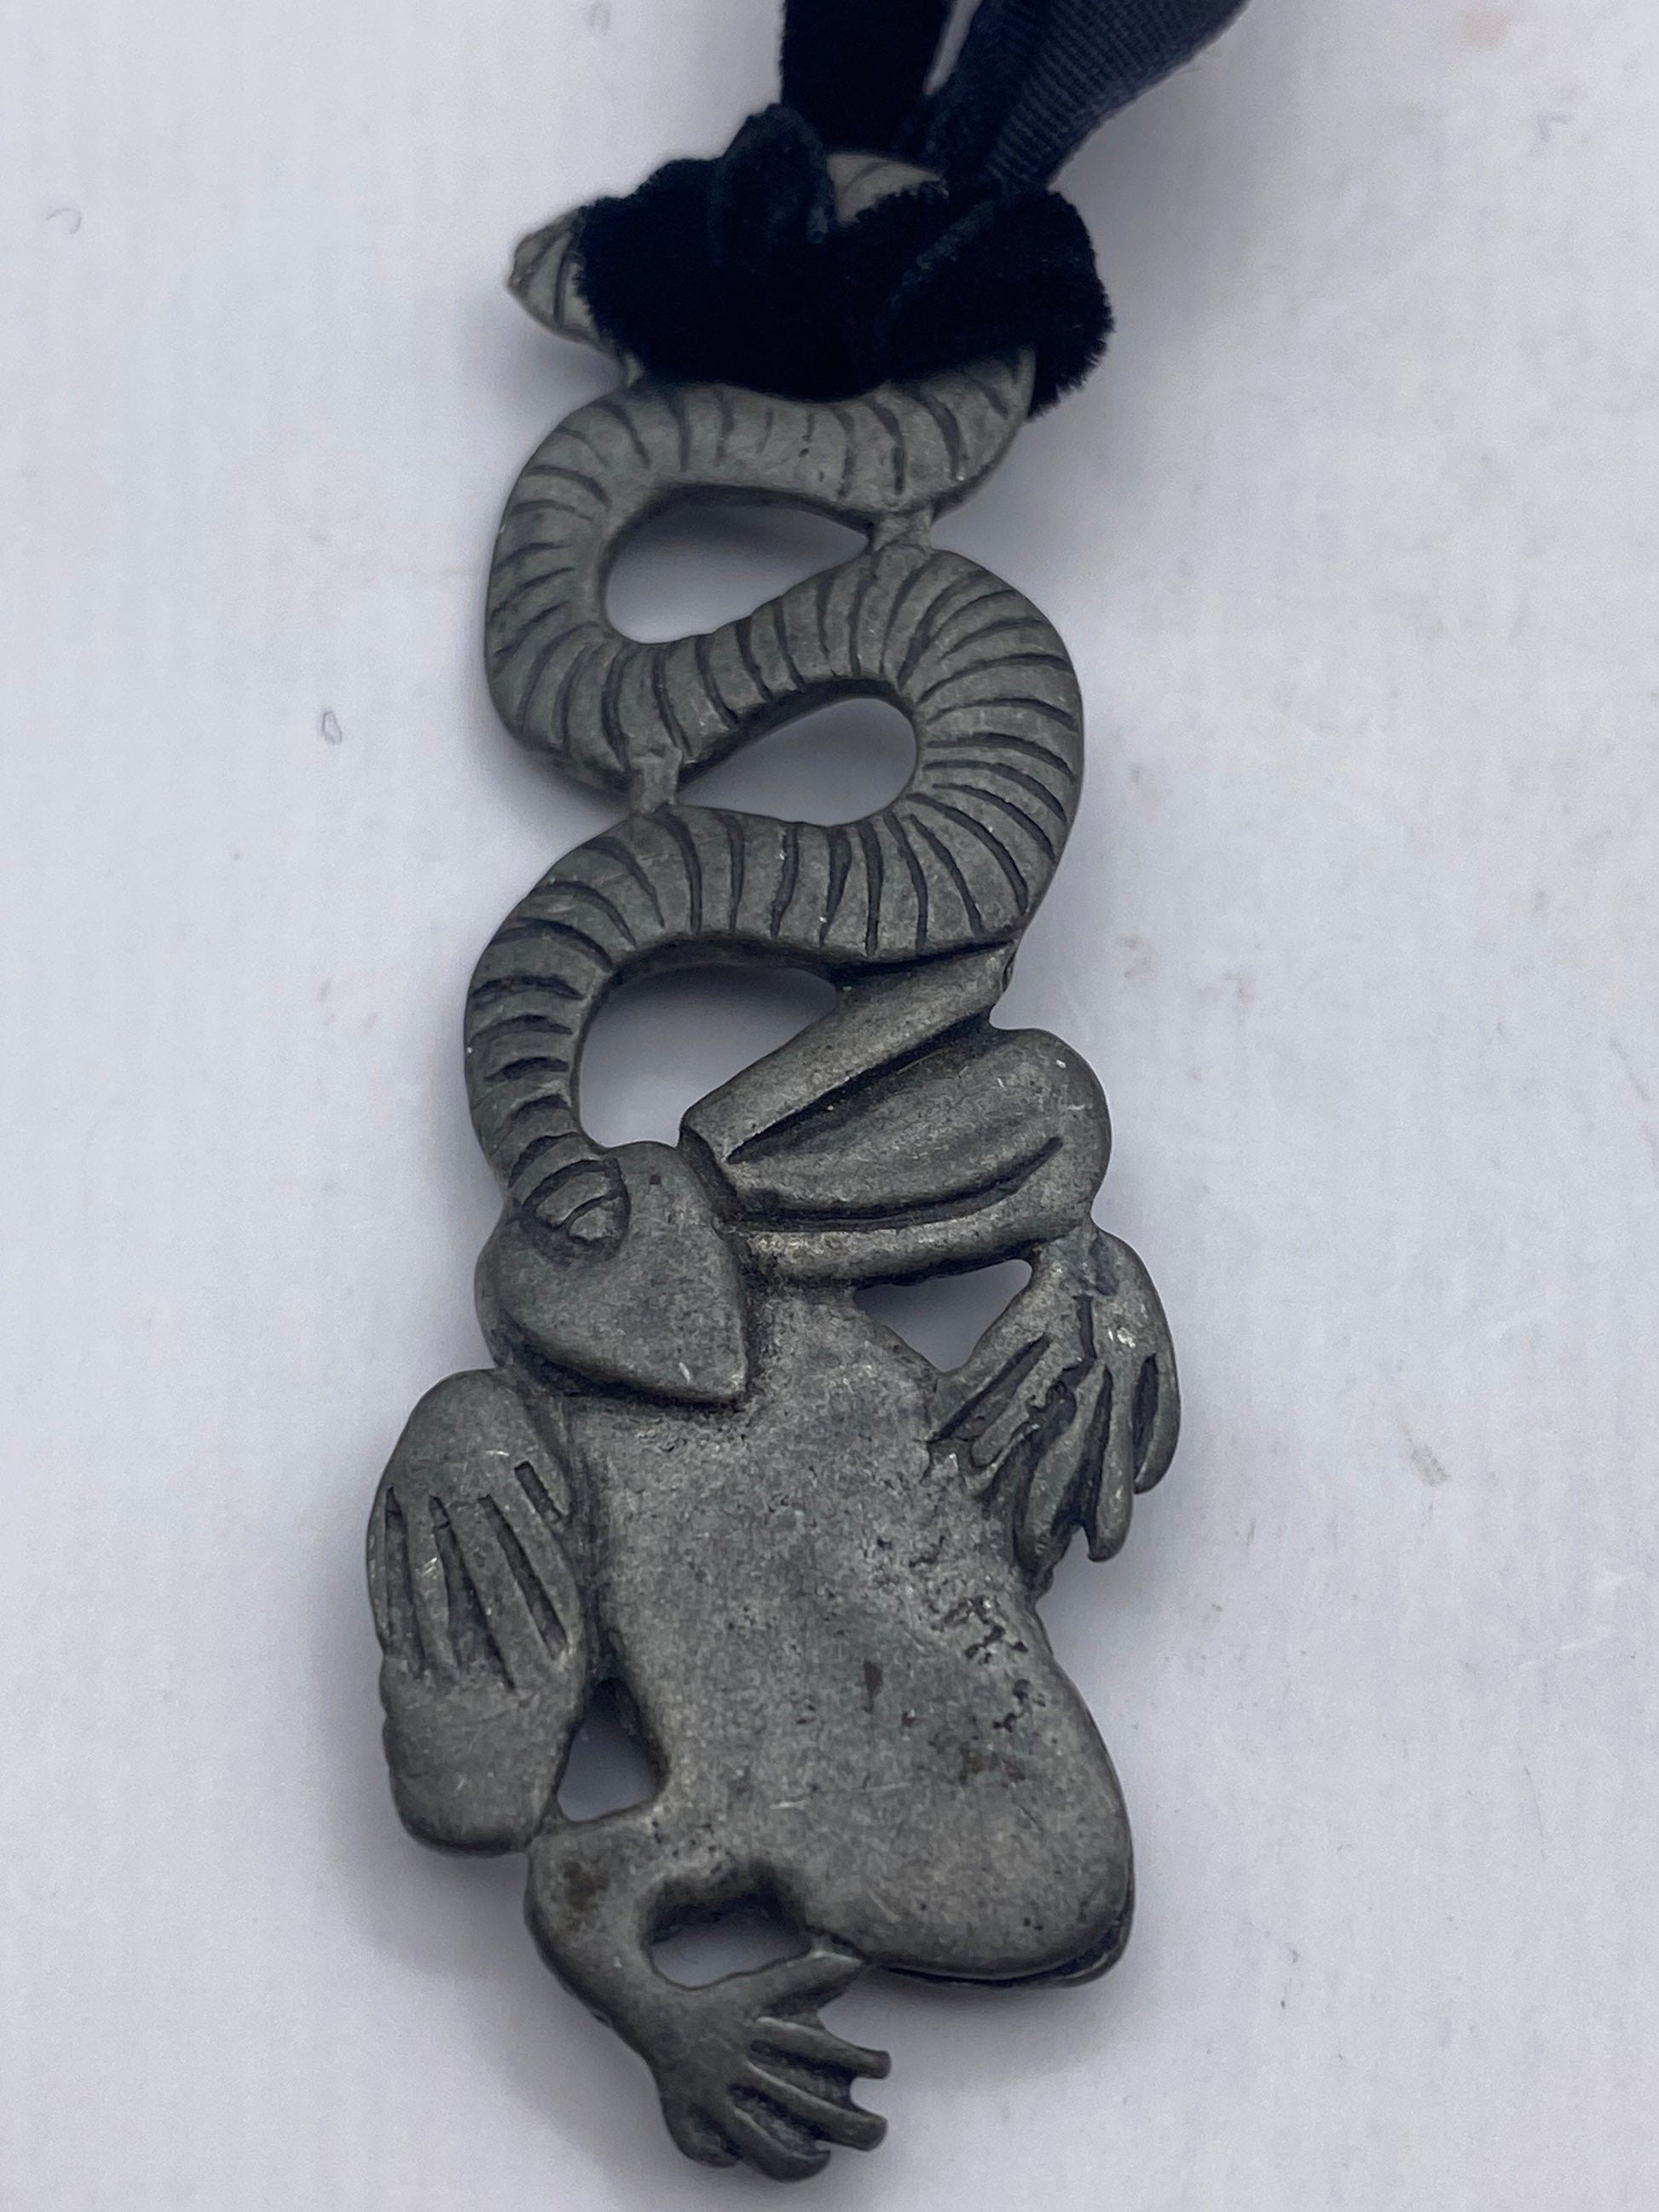 Vintage Pewter Snake Frog Lucky Amulet Pendant